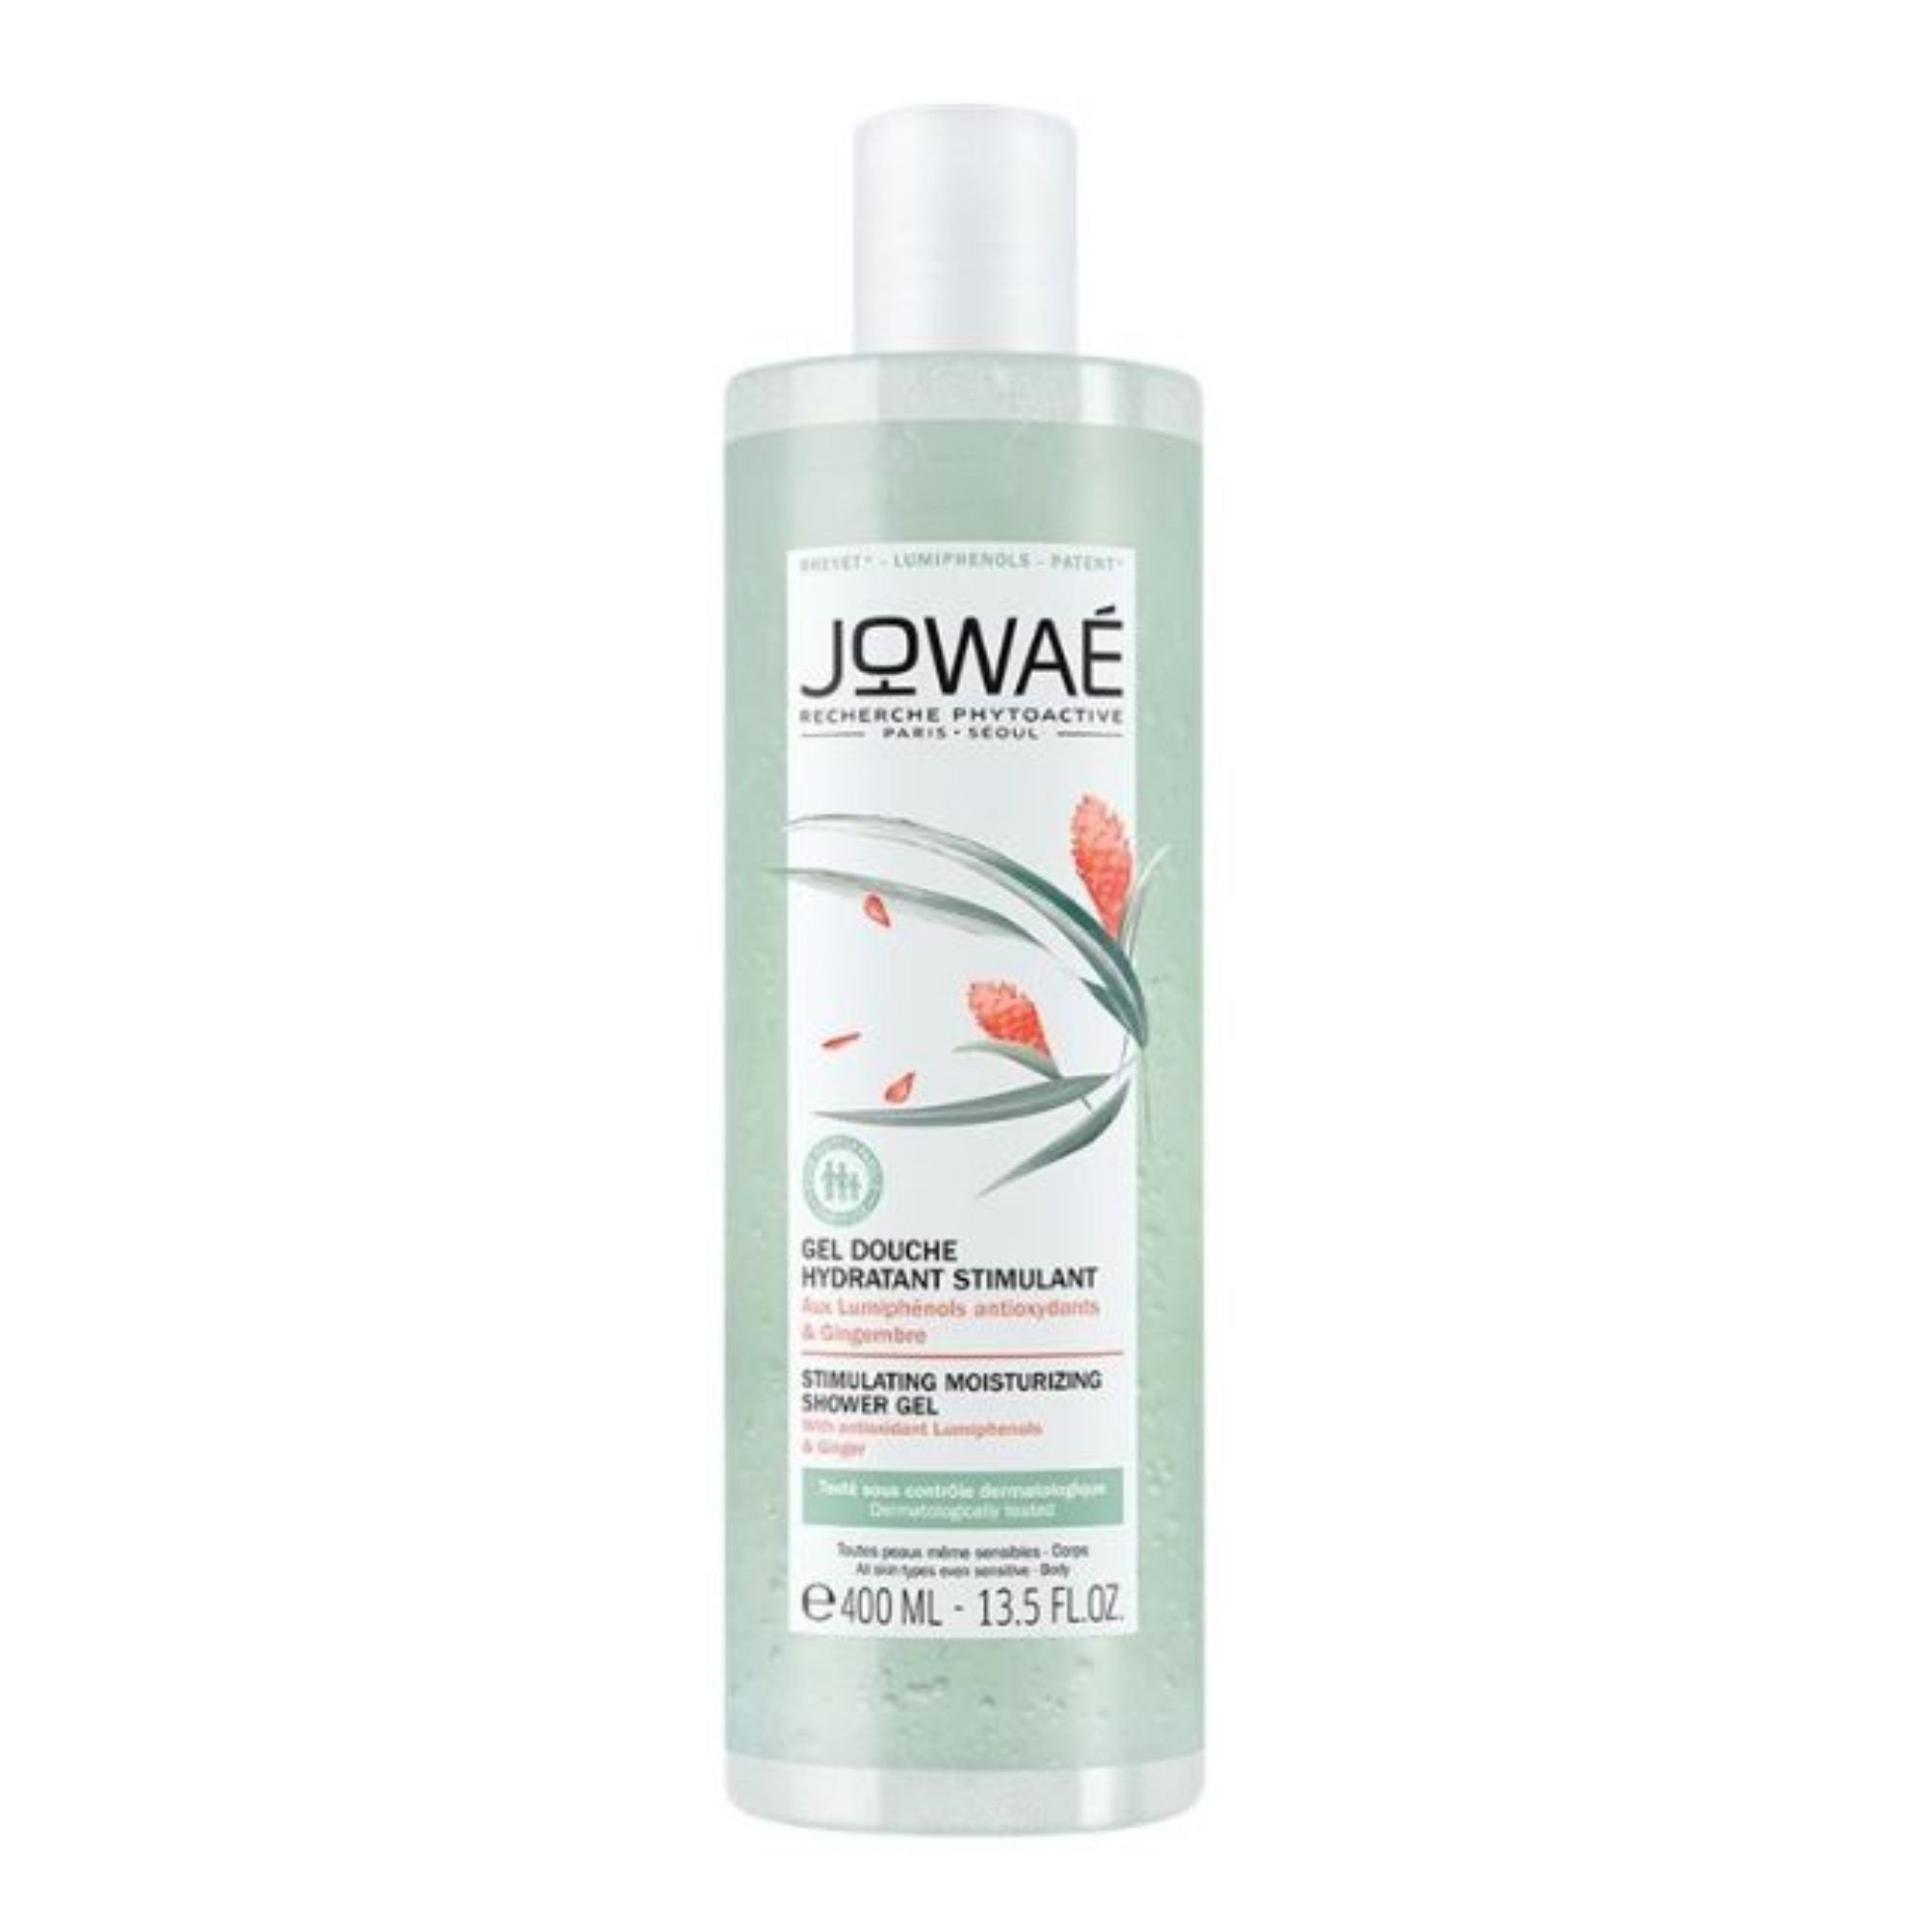 Jowaé Stimulating Moisturizing Shower Gel 400ml